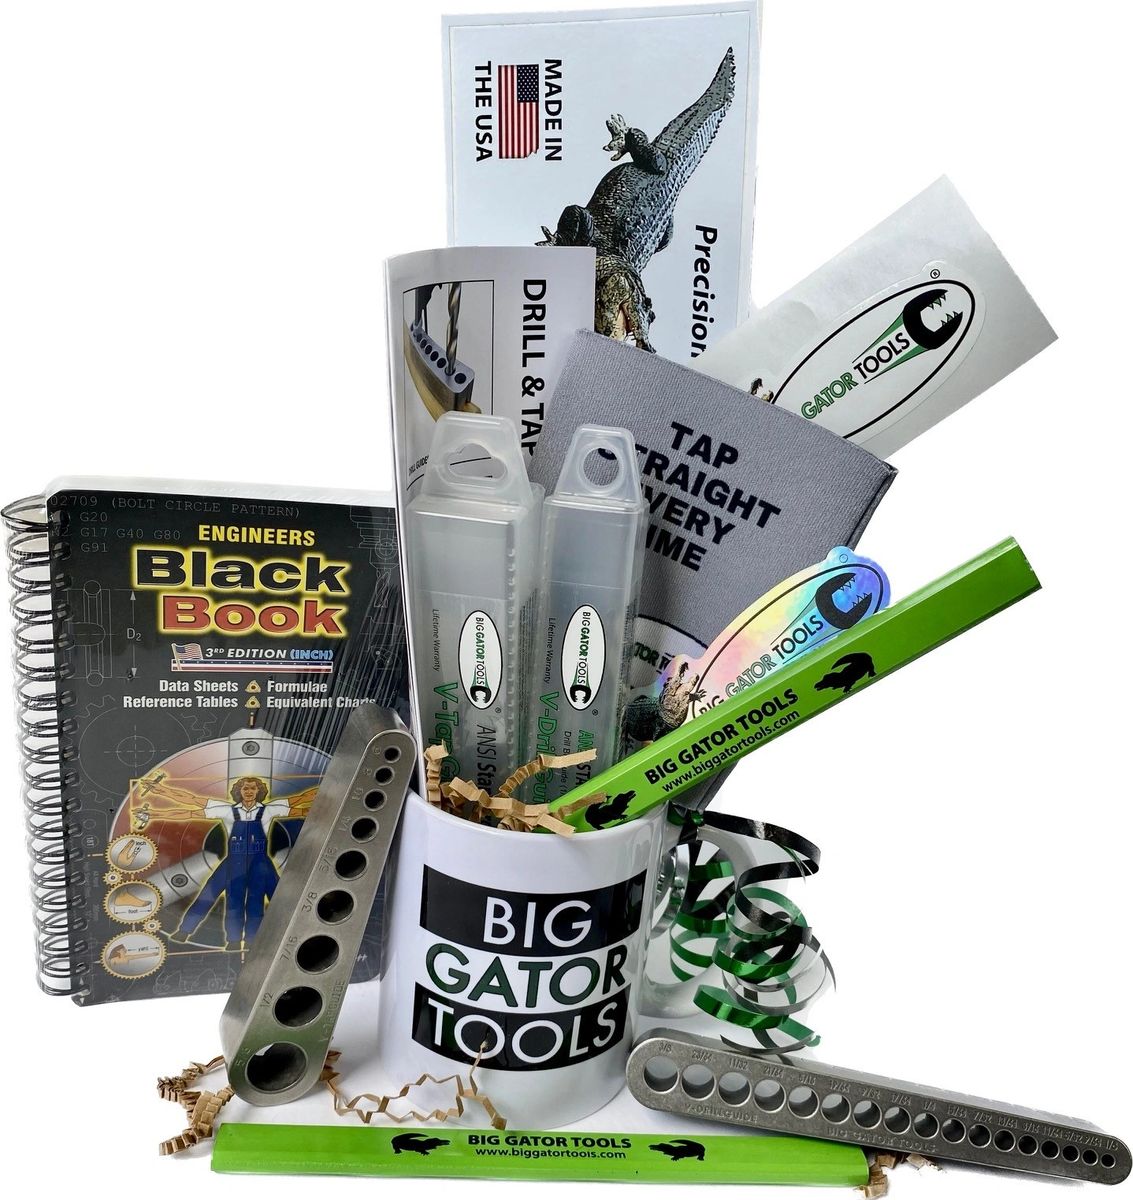 Big Gator Tools Gift Set- 2 tools, Engineering book, 2 carpenter